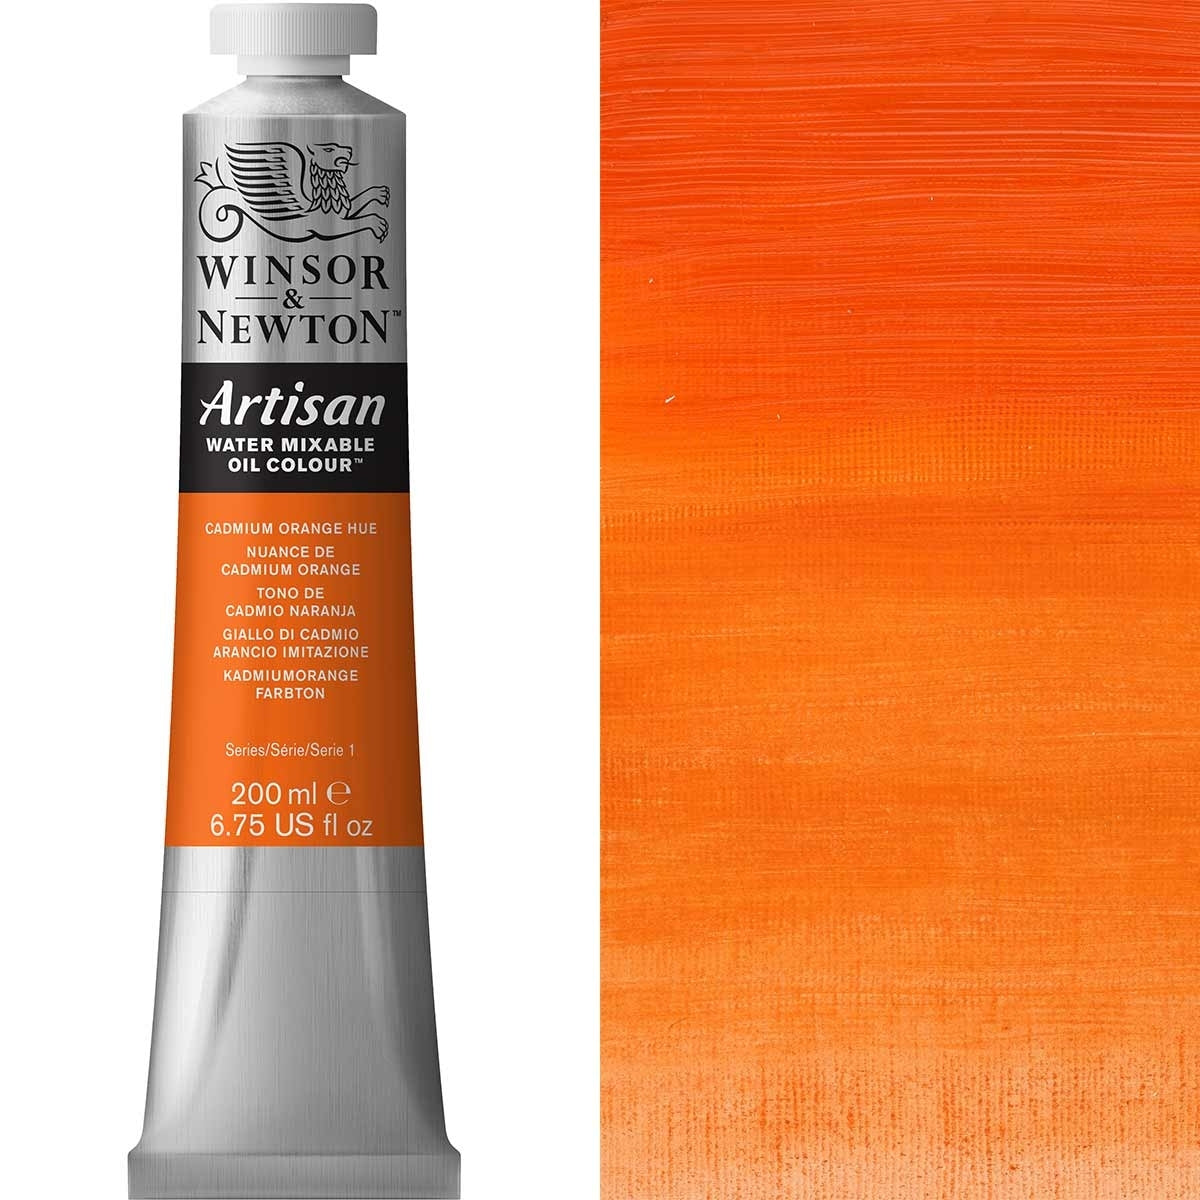 Winsor en Newton - Artisan Oil Color Water Mixable - 200 ml - Cadmium Orange Hue